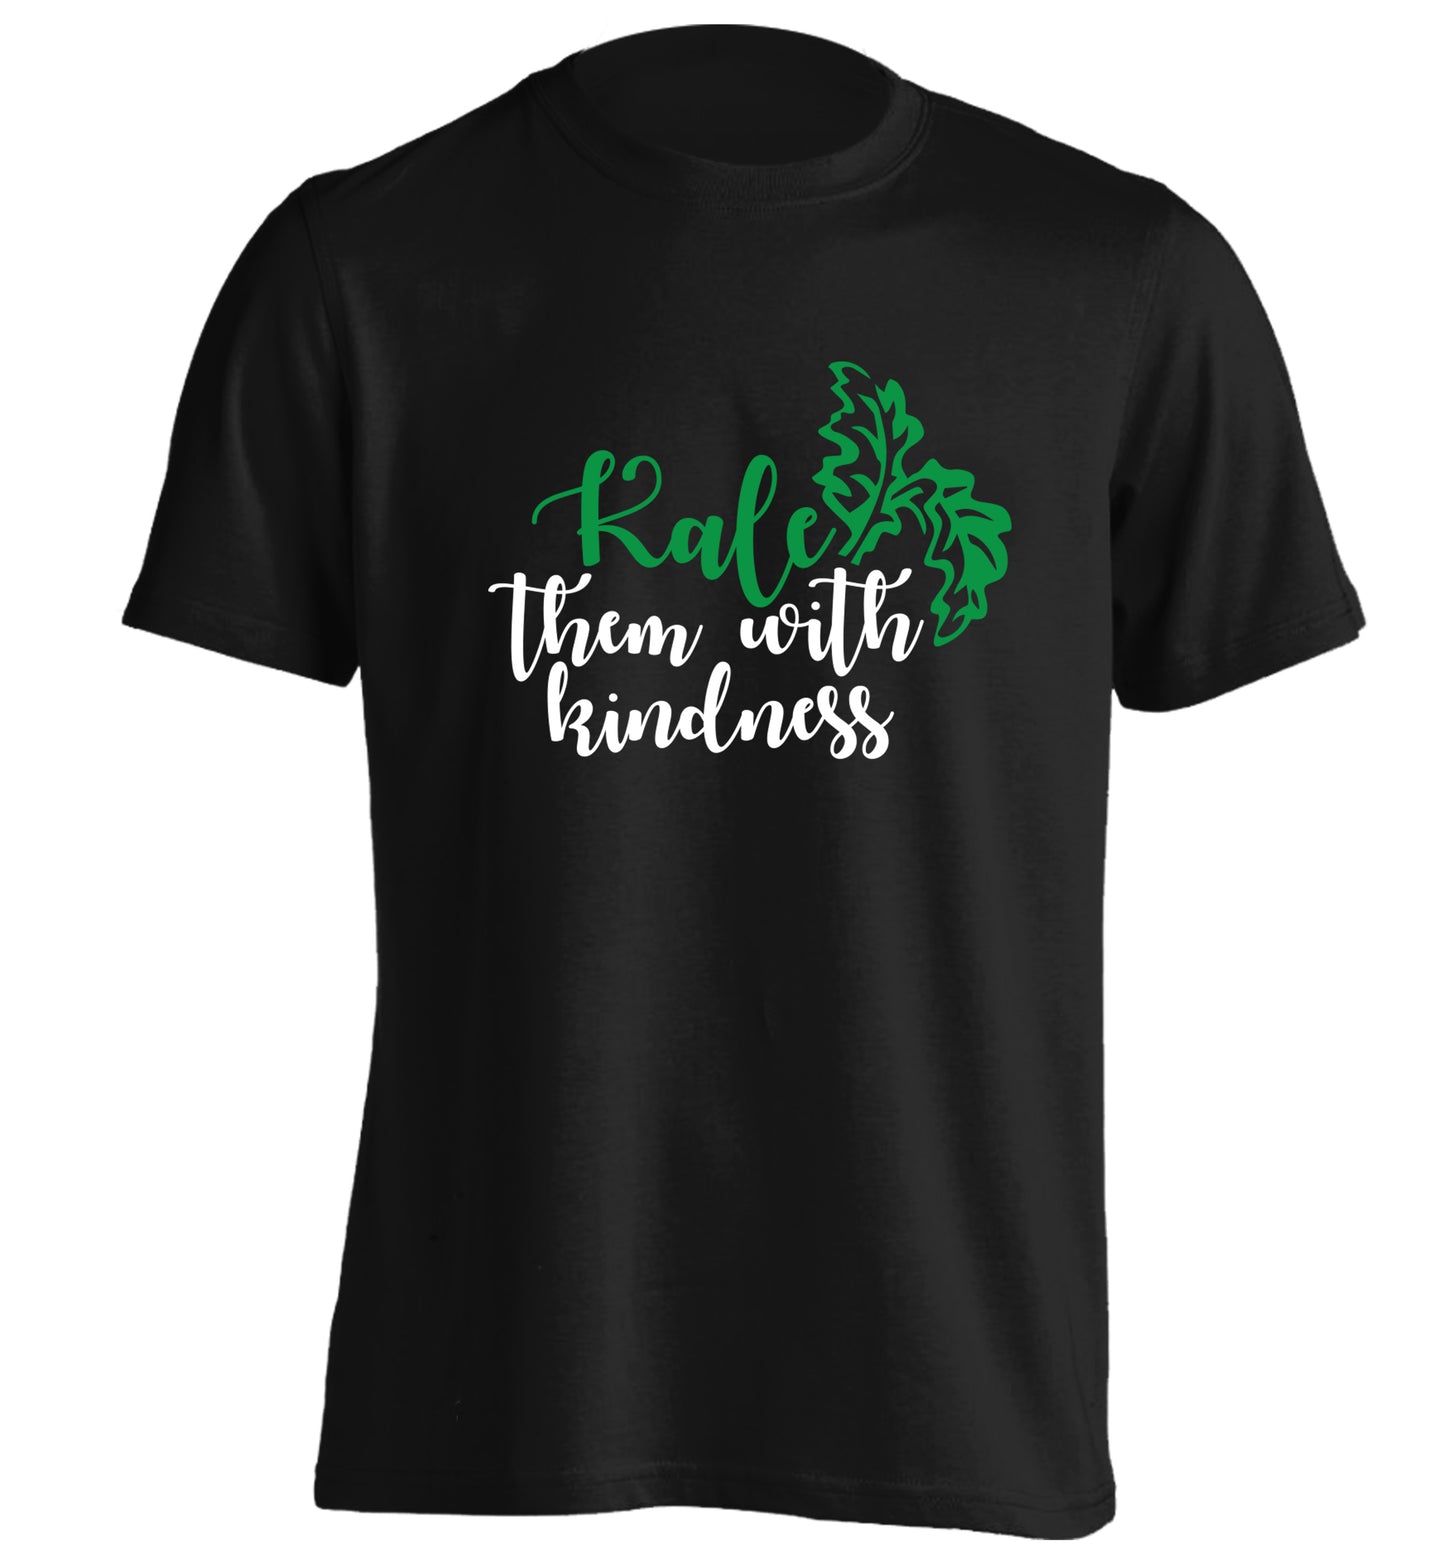 Kale them with kindness adults unisex black Tshirt 2XL